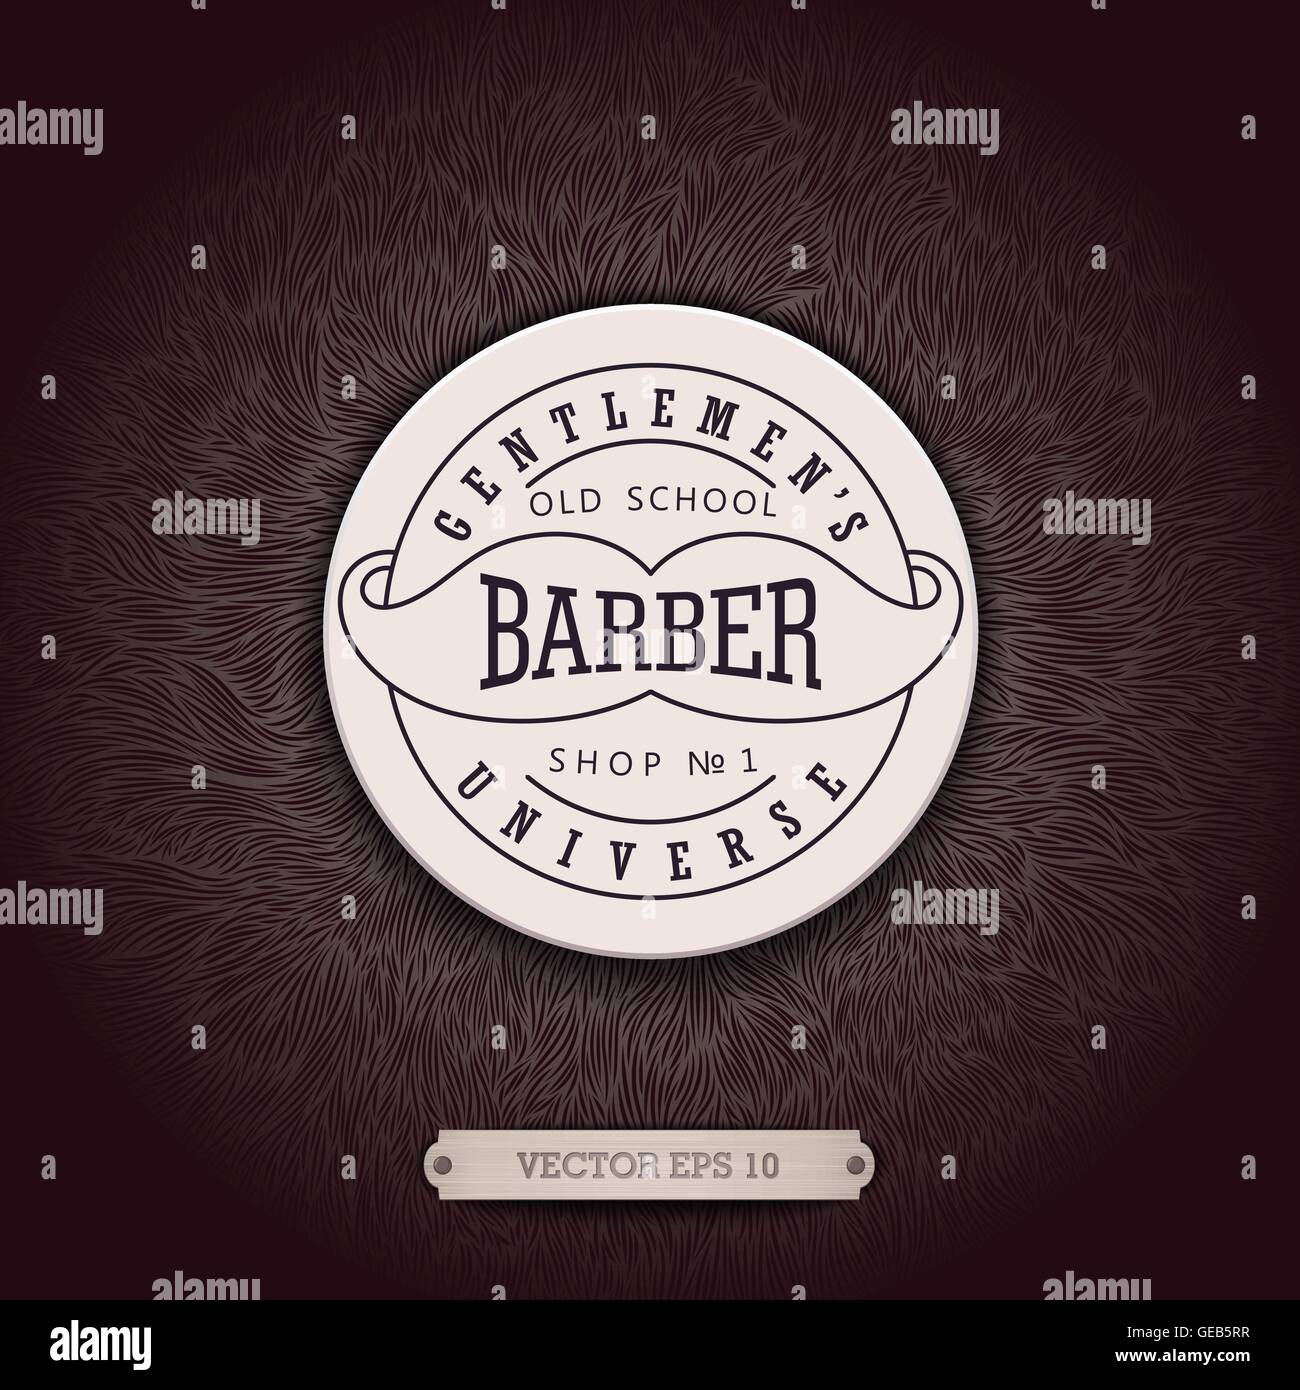 Background design for Barbershop Stock Vector